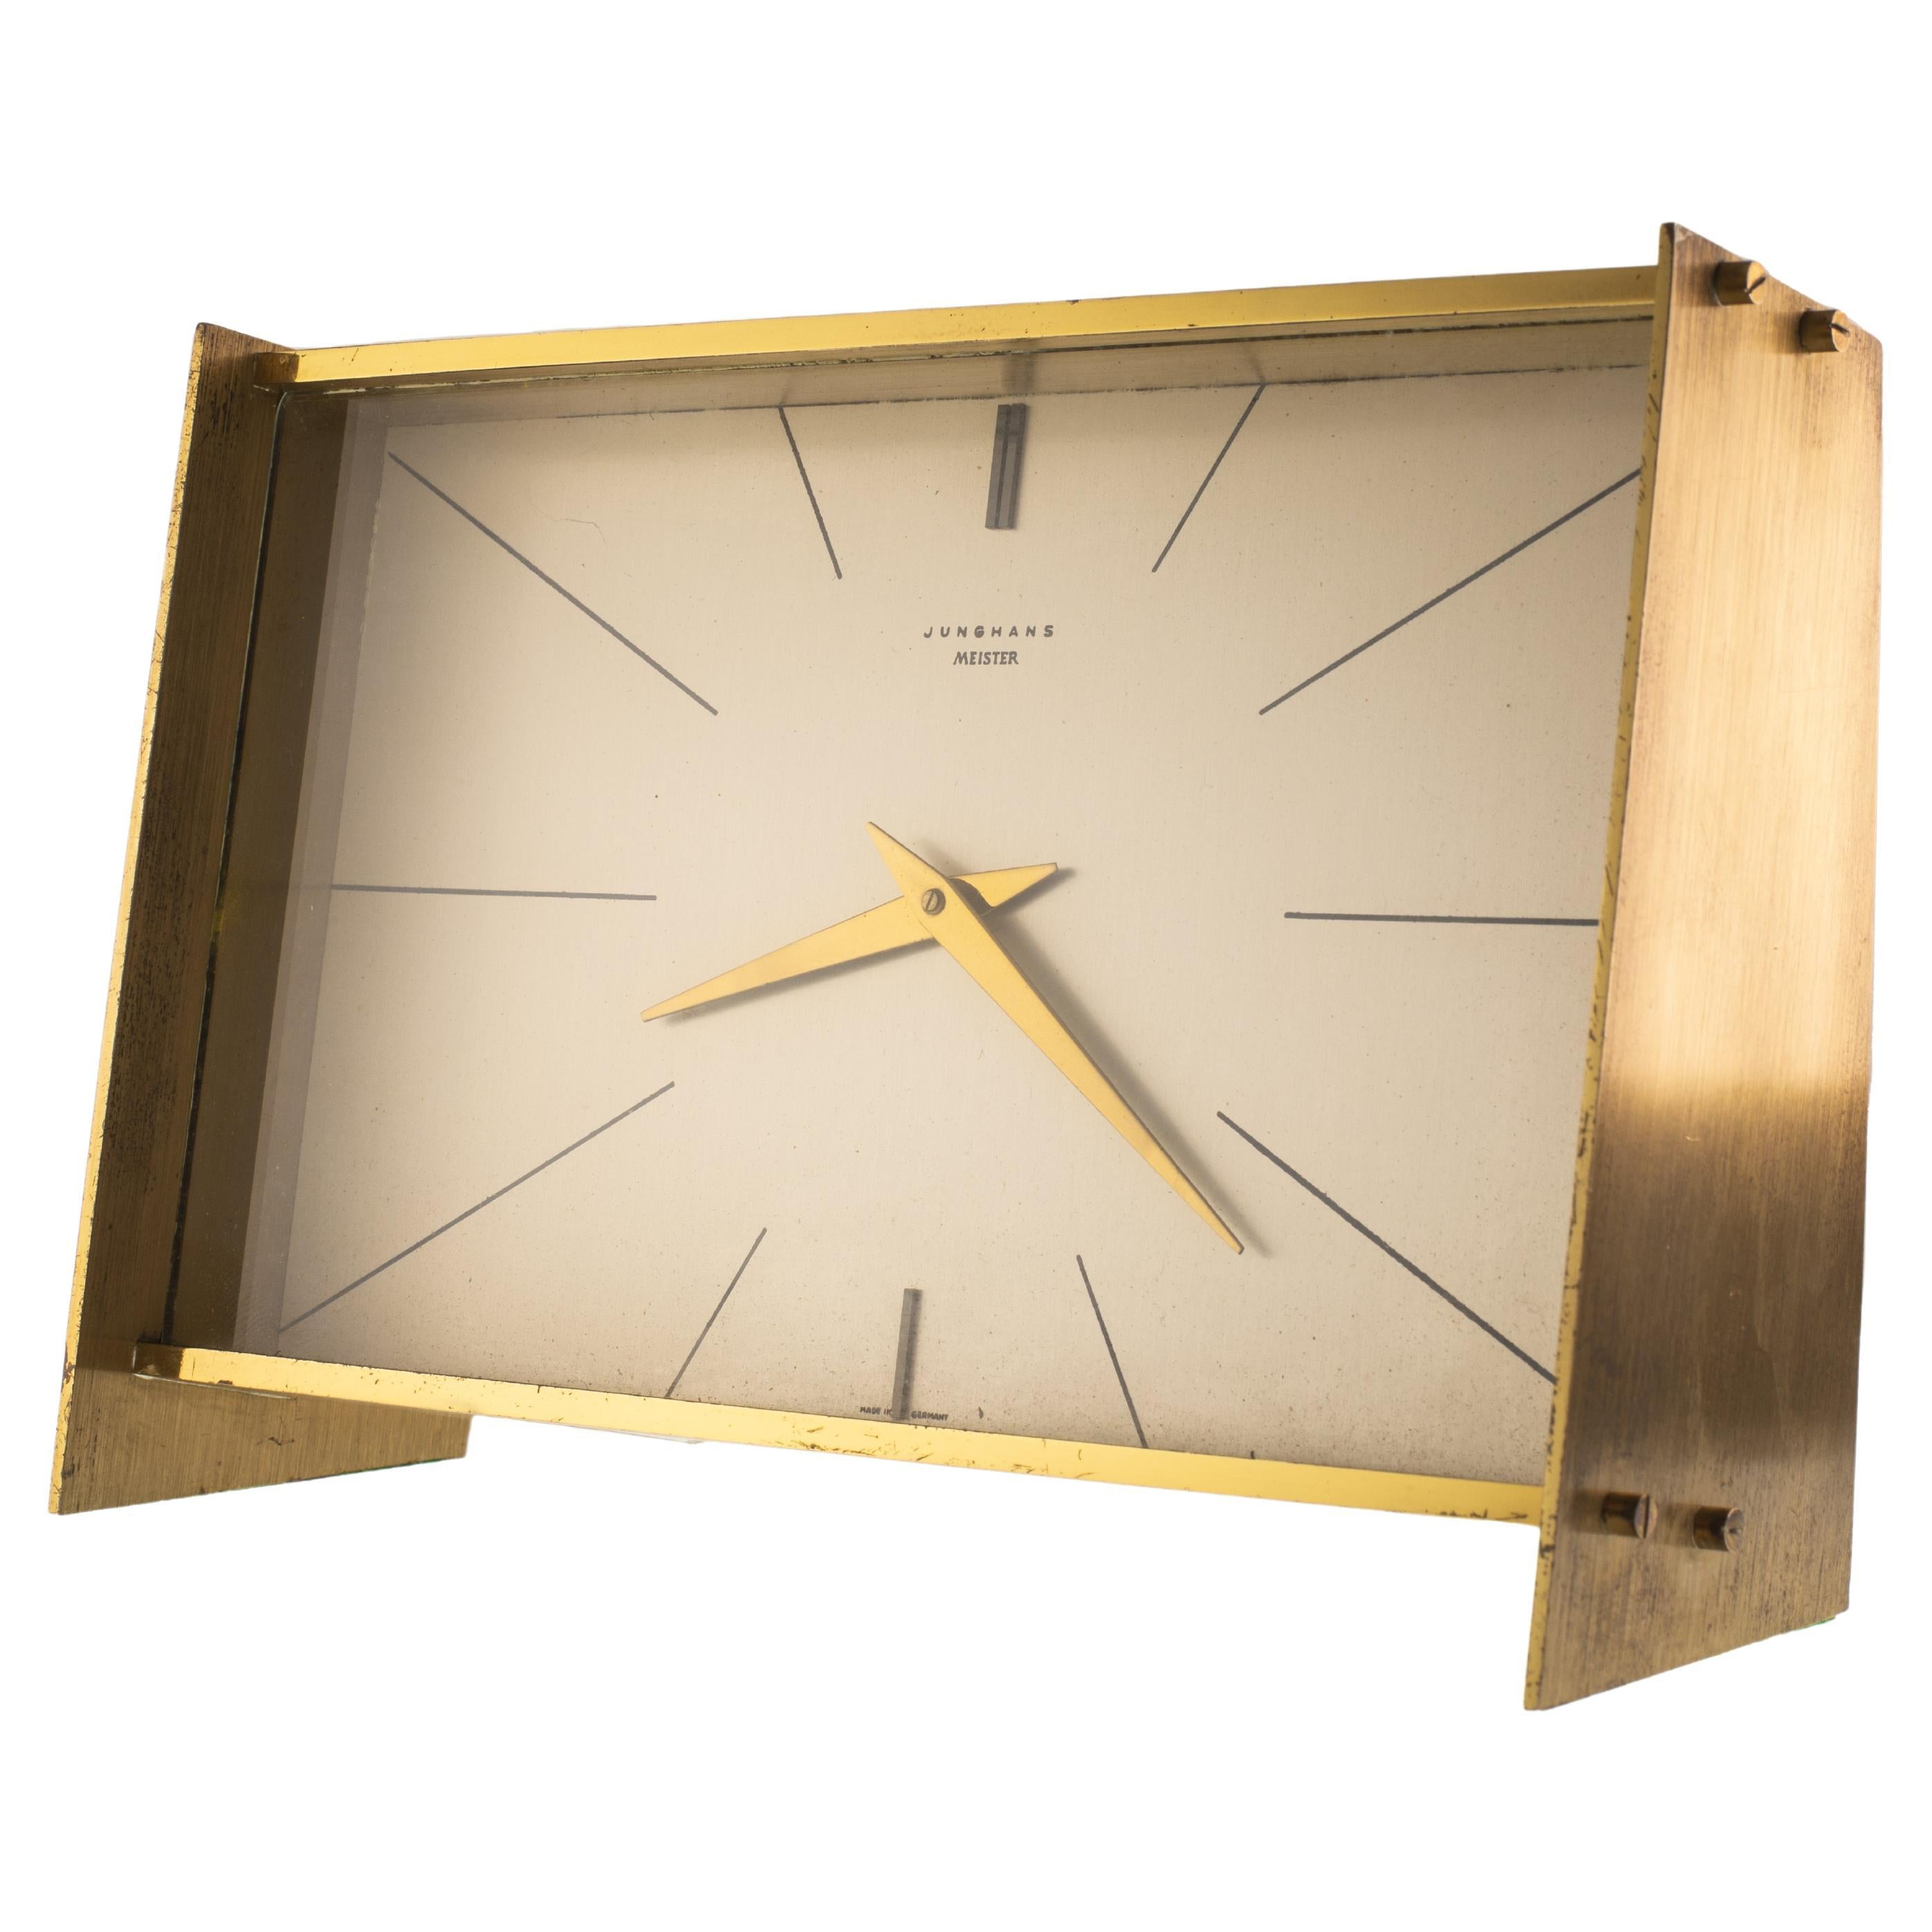 Junghans Germany Desk Table Clock Gold Brass For Sale